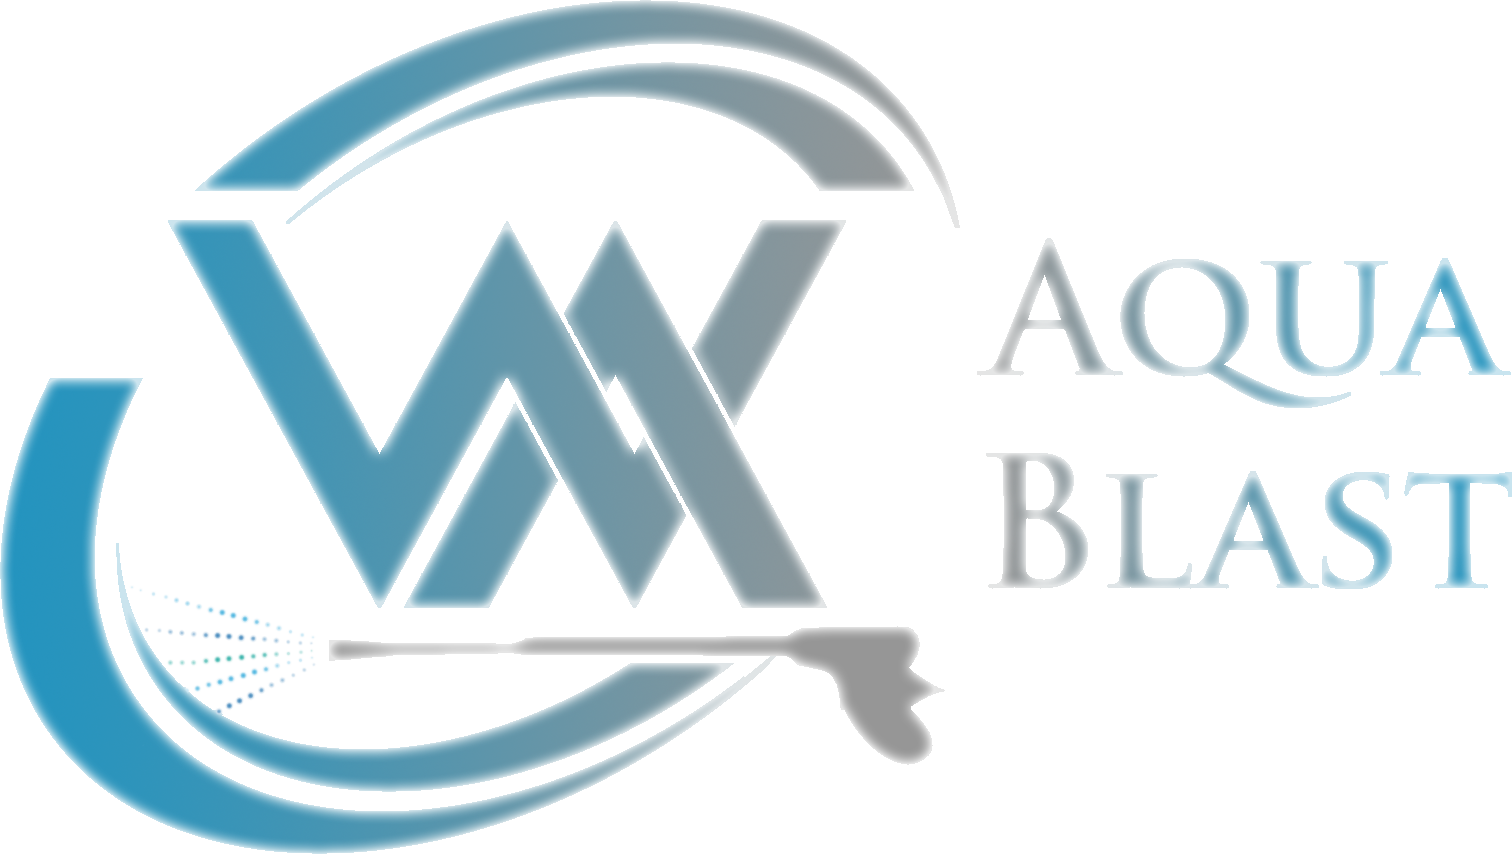 wa-aqua-blast-logo